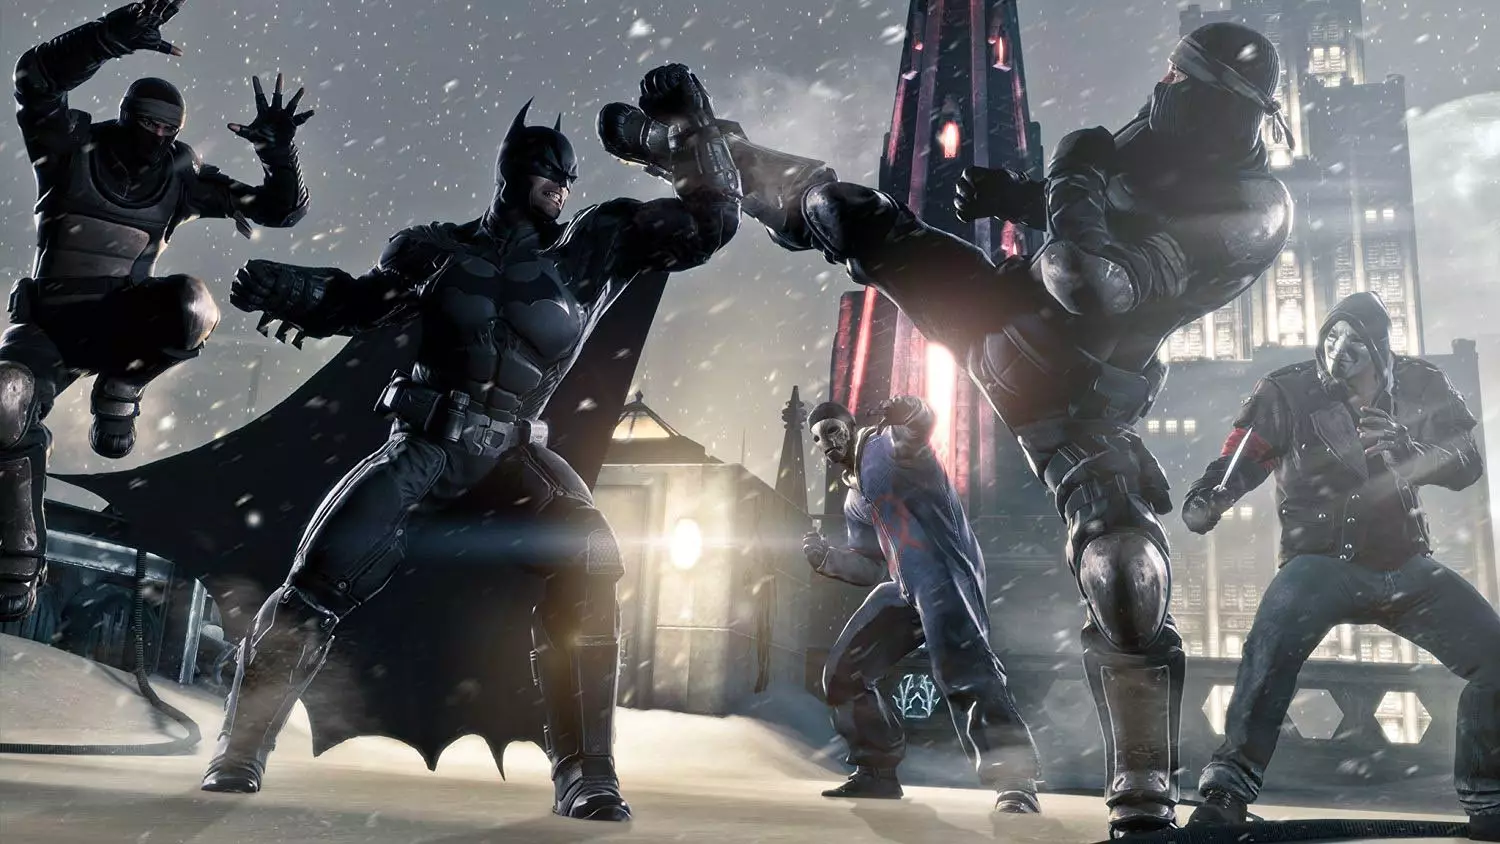 Batman: Arkham Origins, PC - Steam